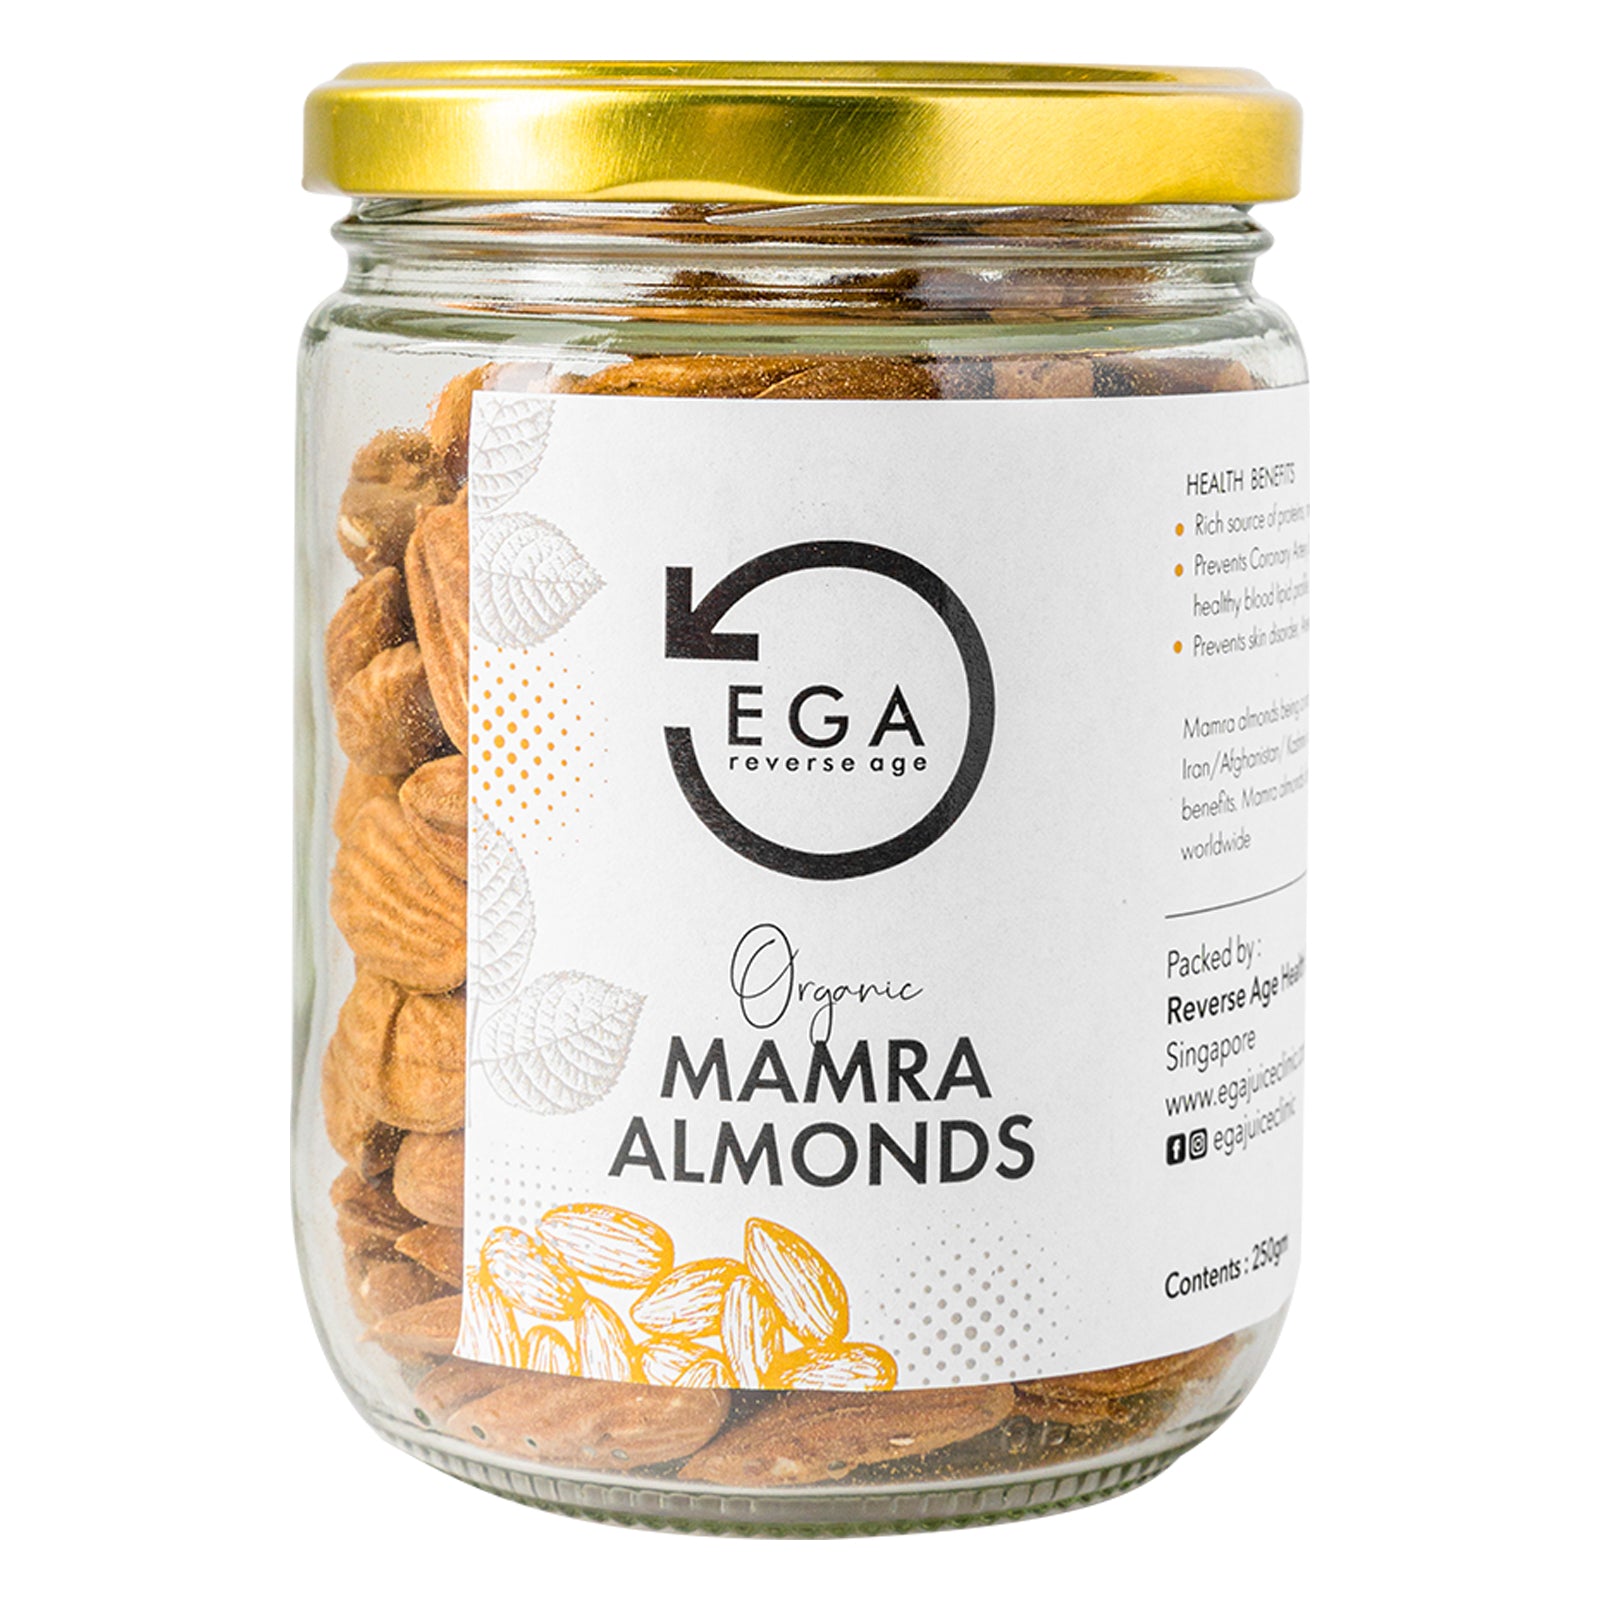 Organic Mamra Almonds Product Packaging - No plastic